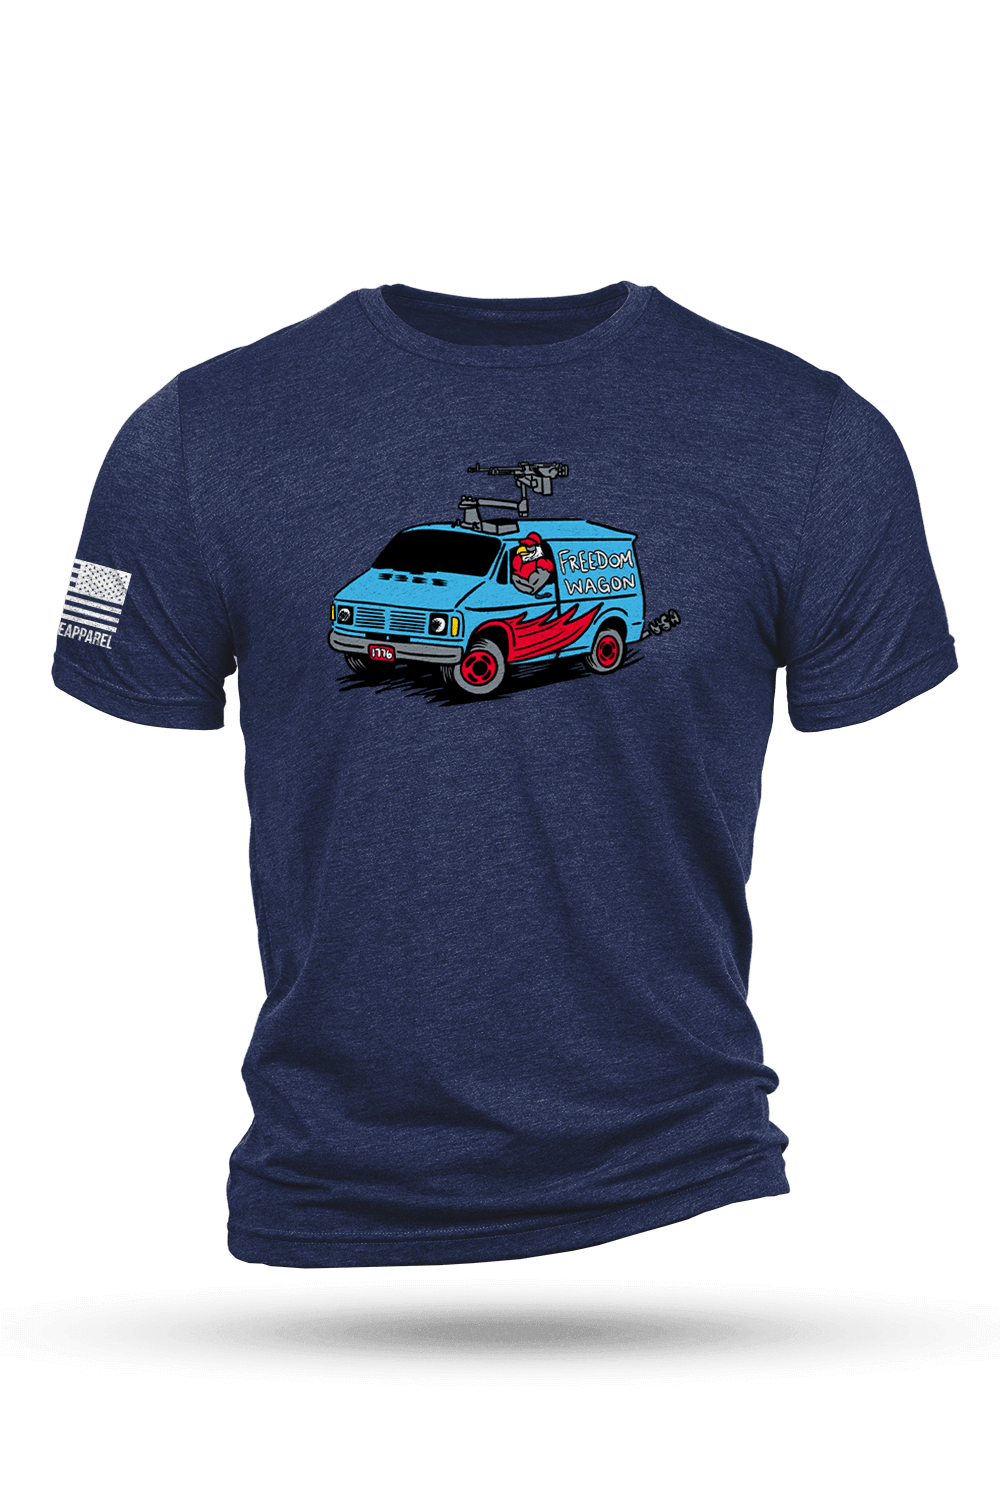 T - Shirt - Freedom Wagon